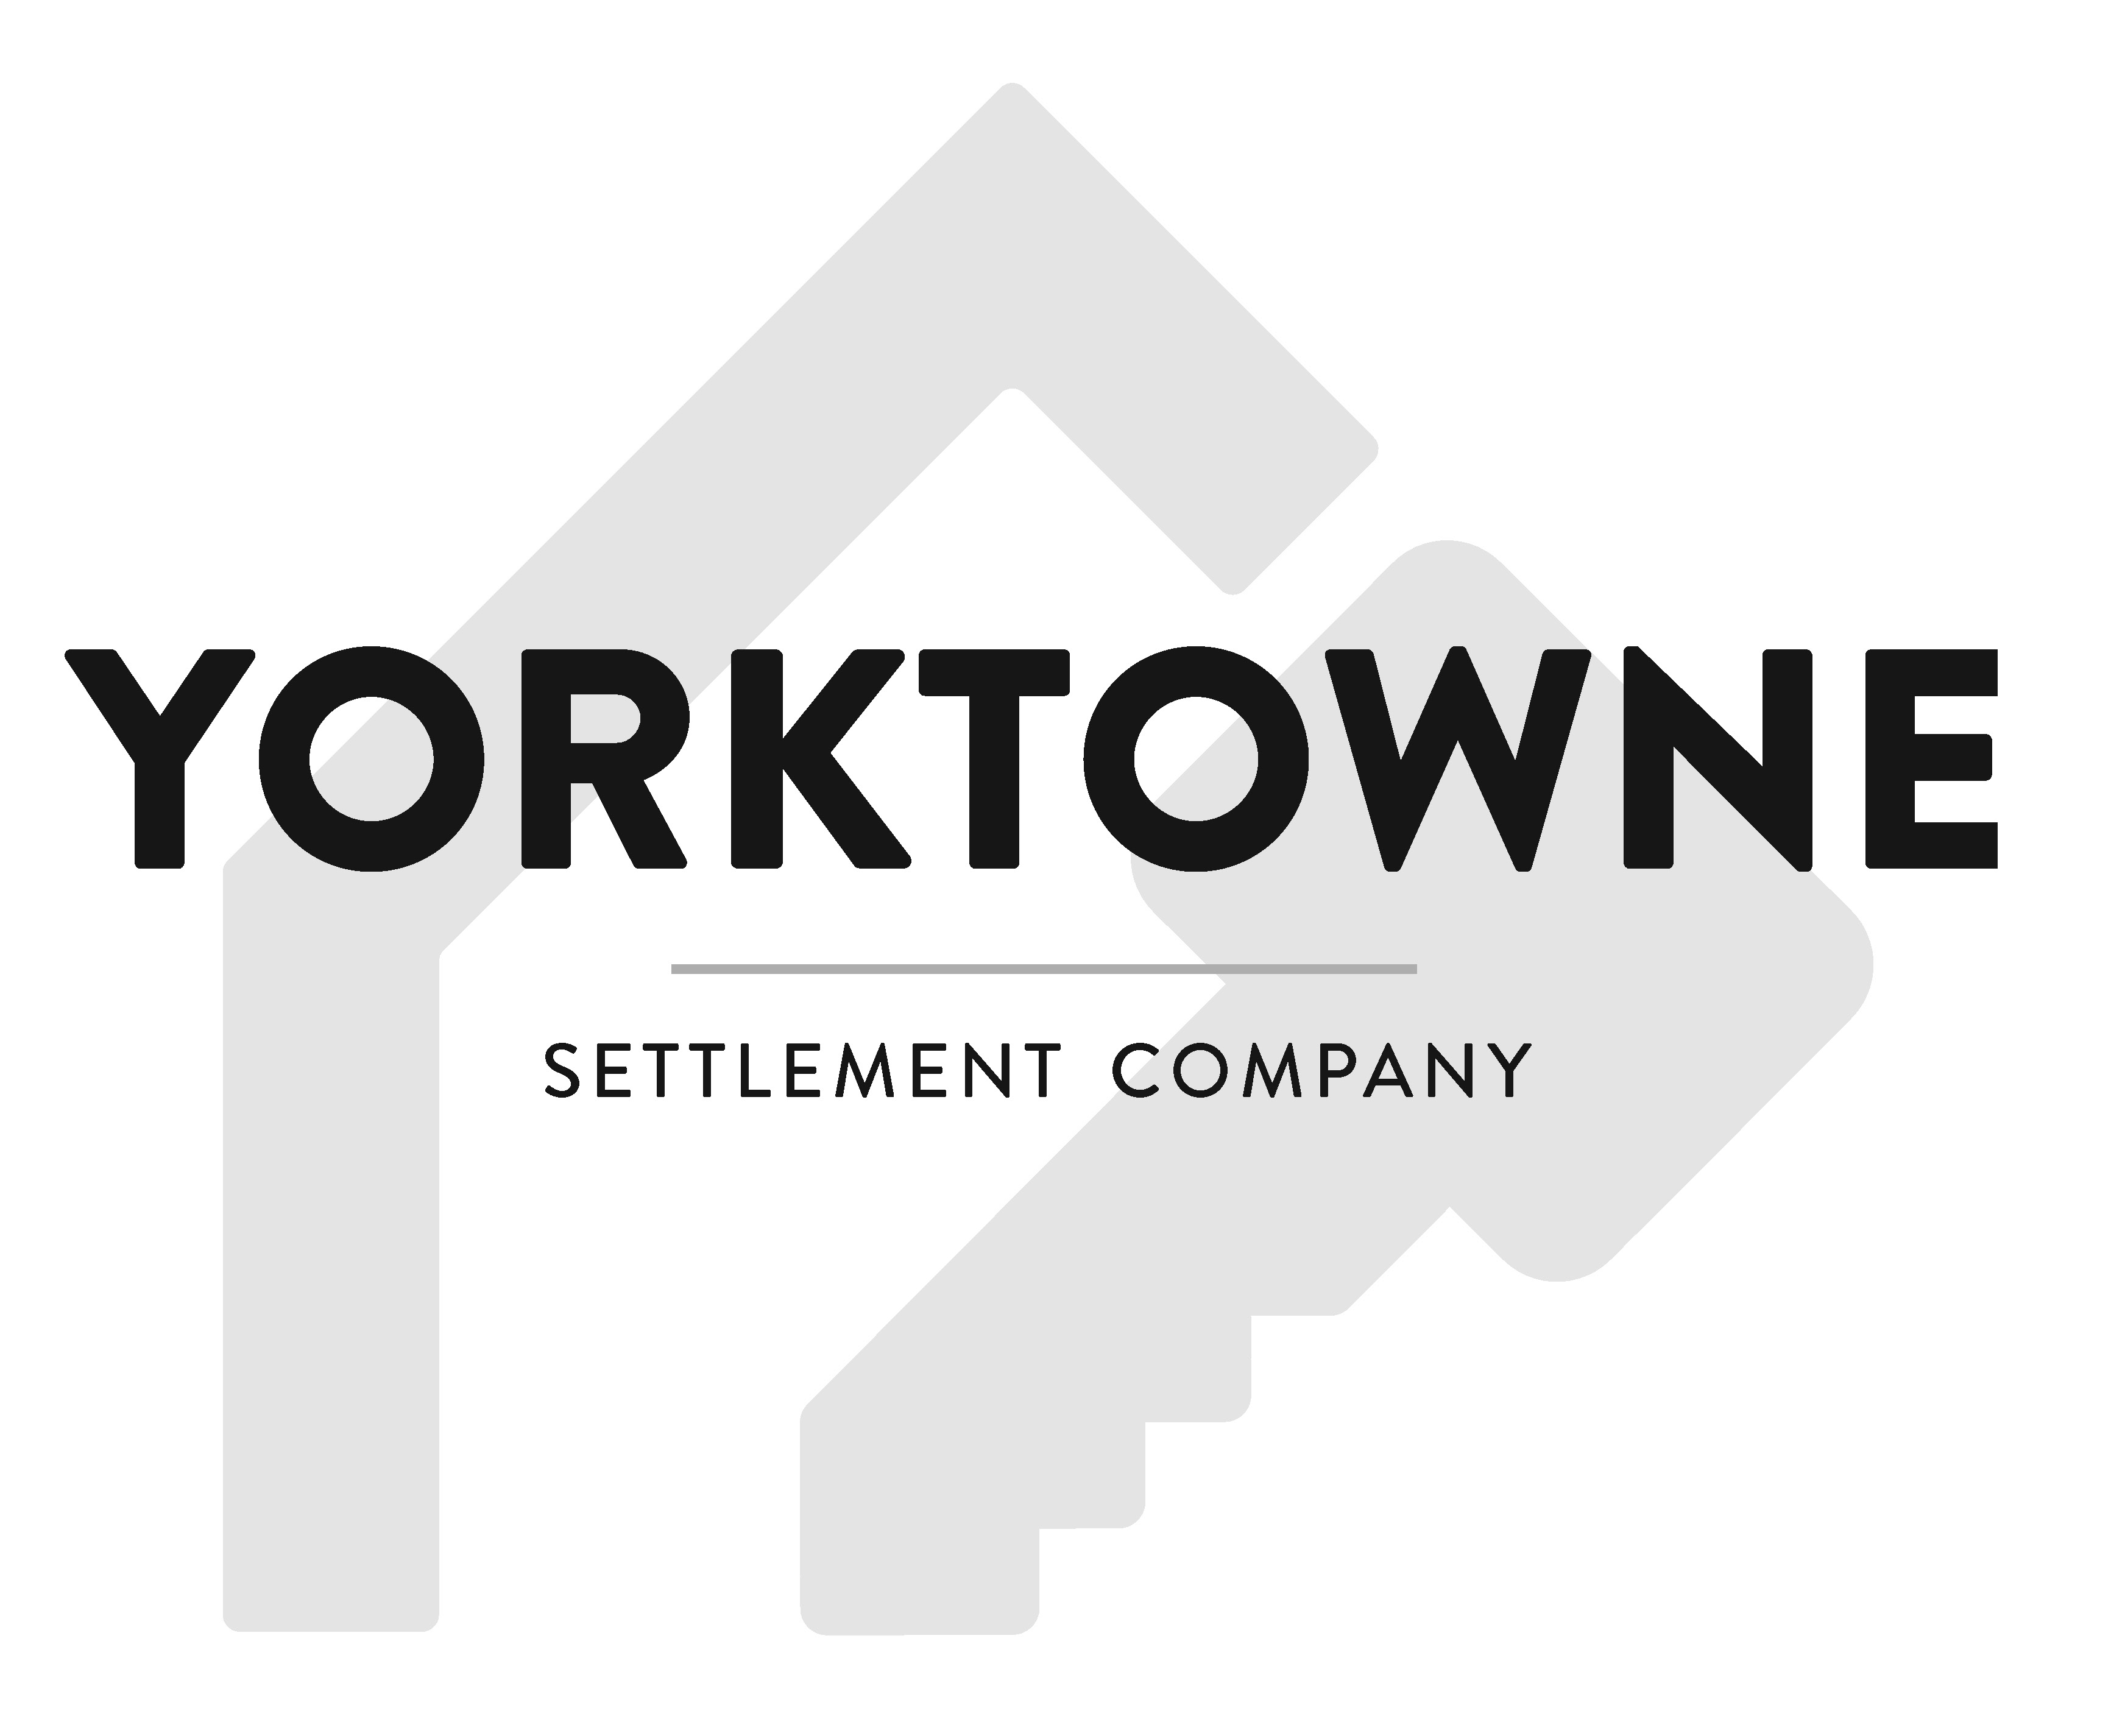 Yorktowne Settlement Square Company Logo (key and house shape)